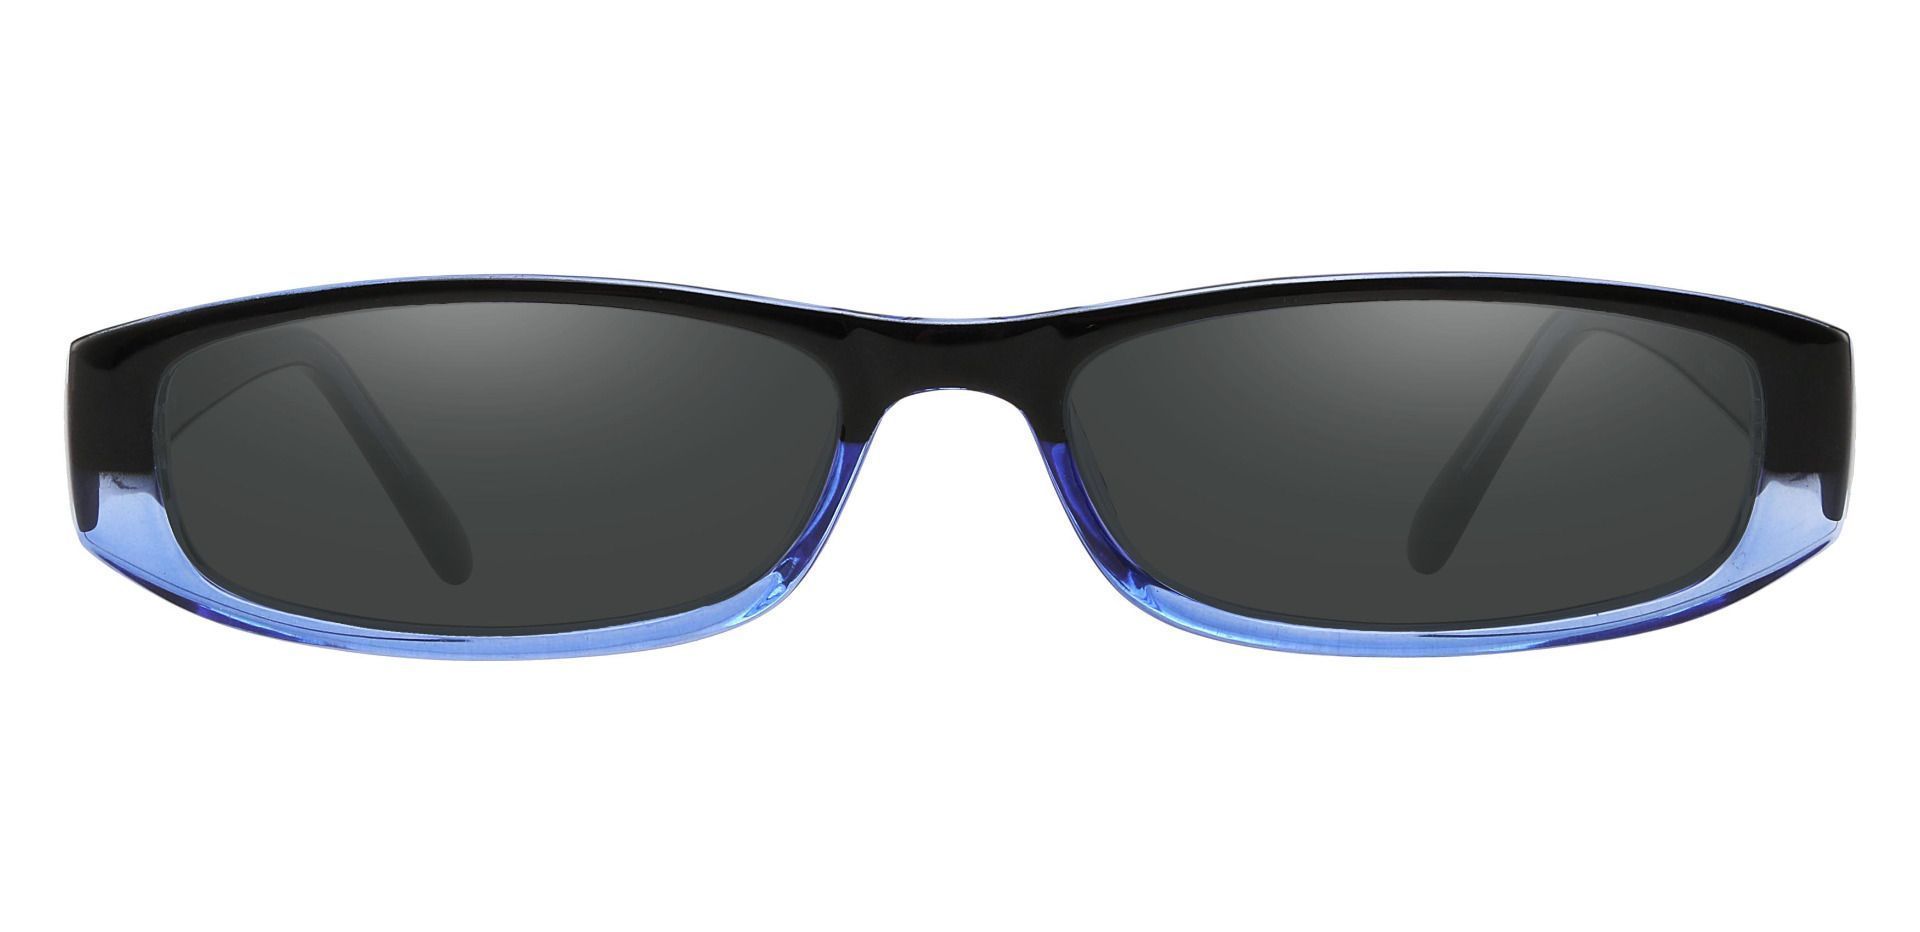 Elgin Rectangle Non-Rx Sunglasses - Blue Frame With Gray Lenses